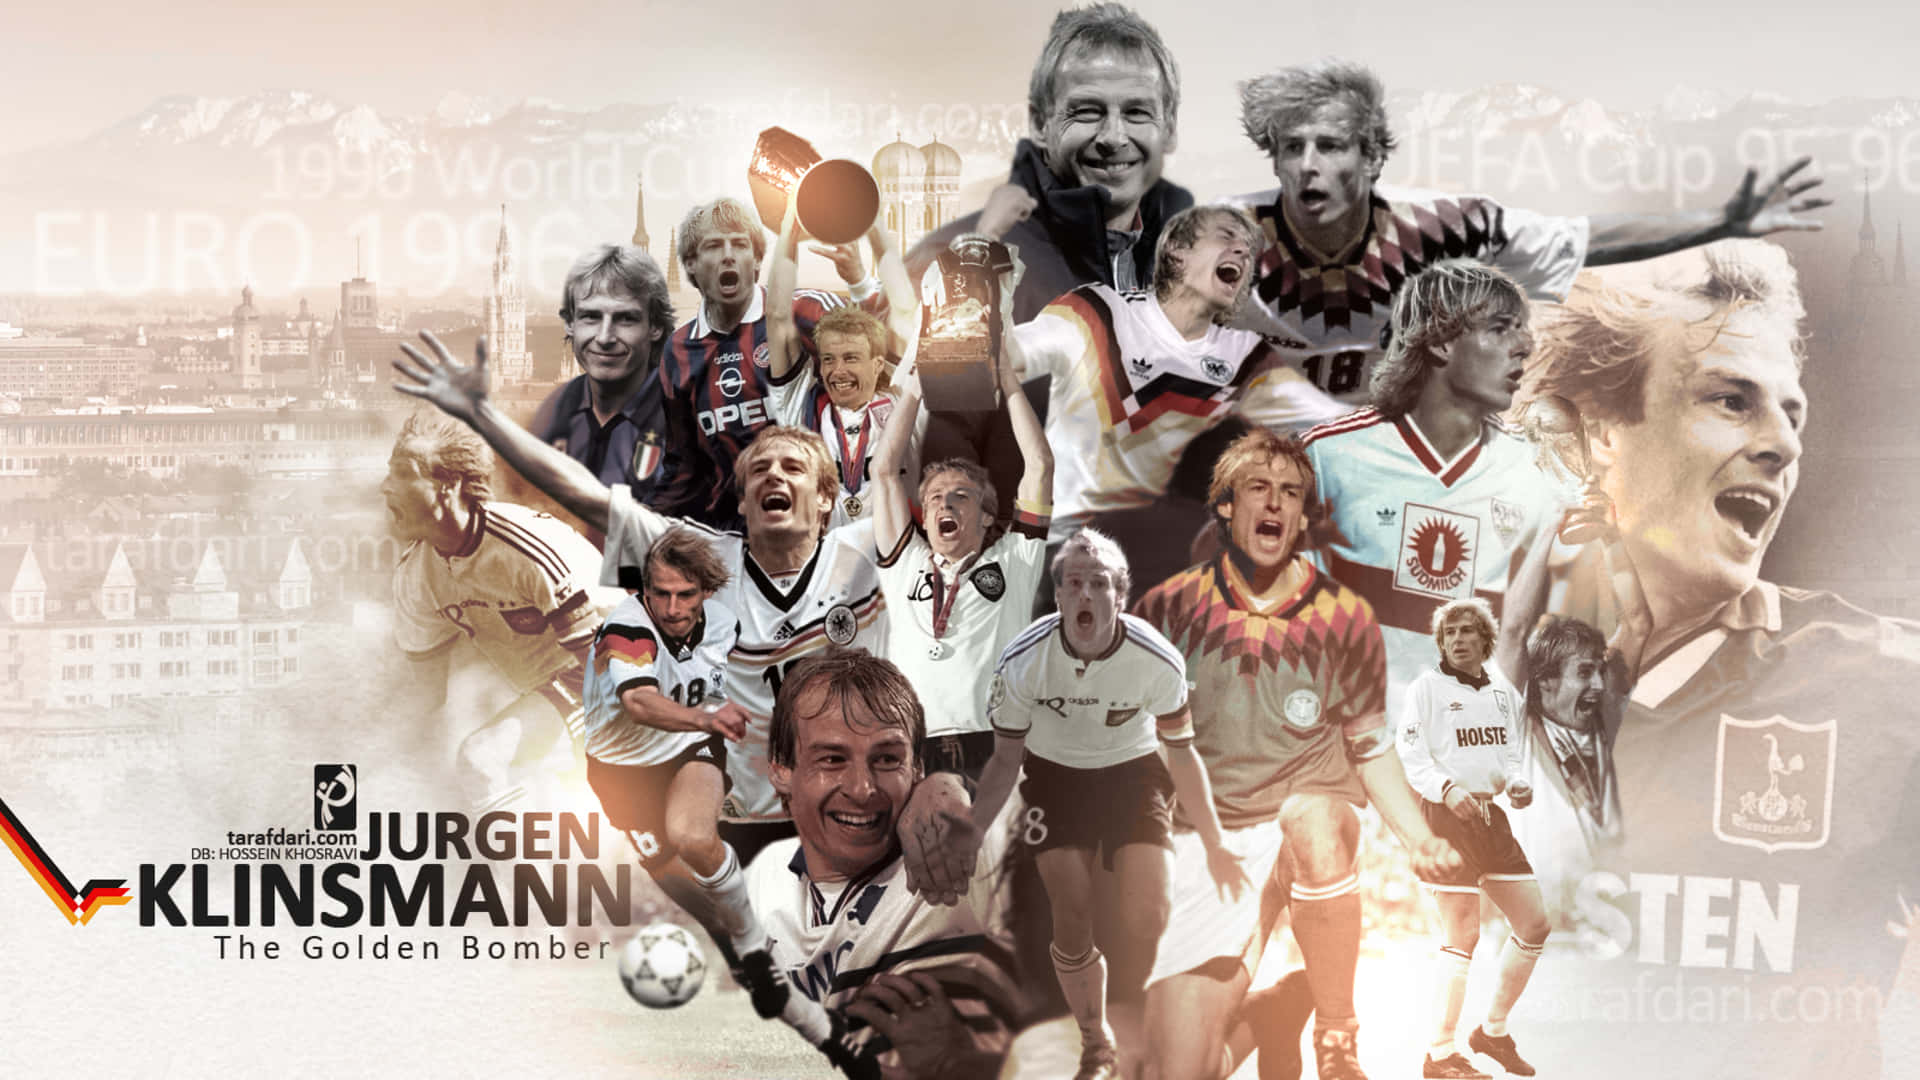 The Golden Bomber, Jurgen Klinsmann in Action Wallpaper